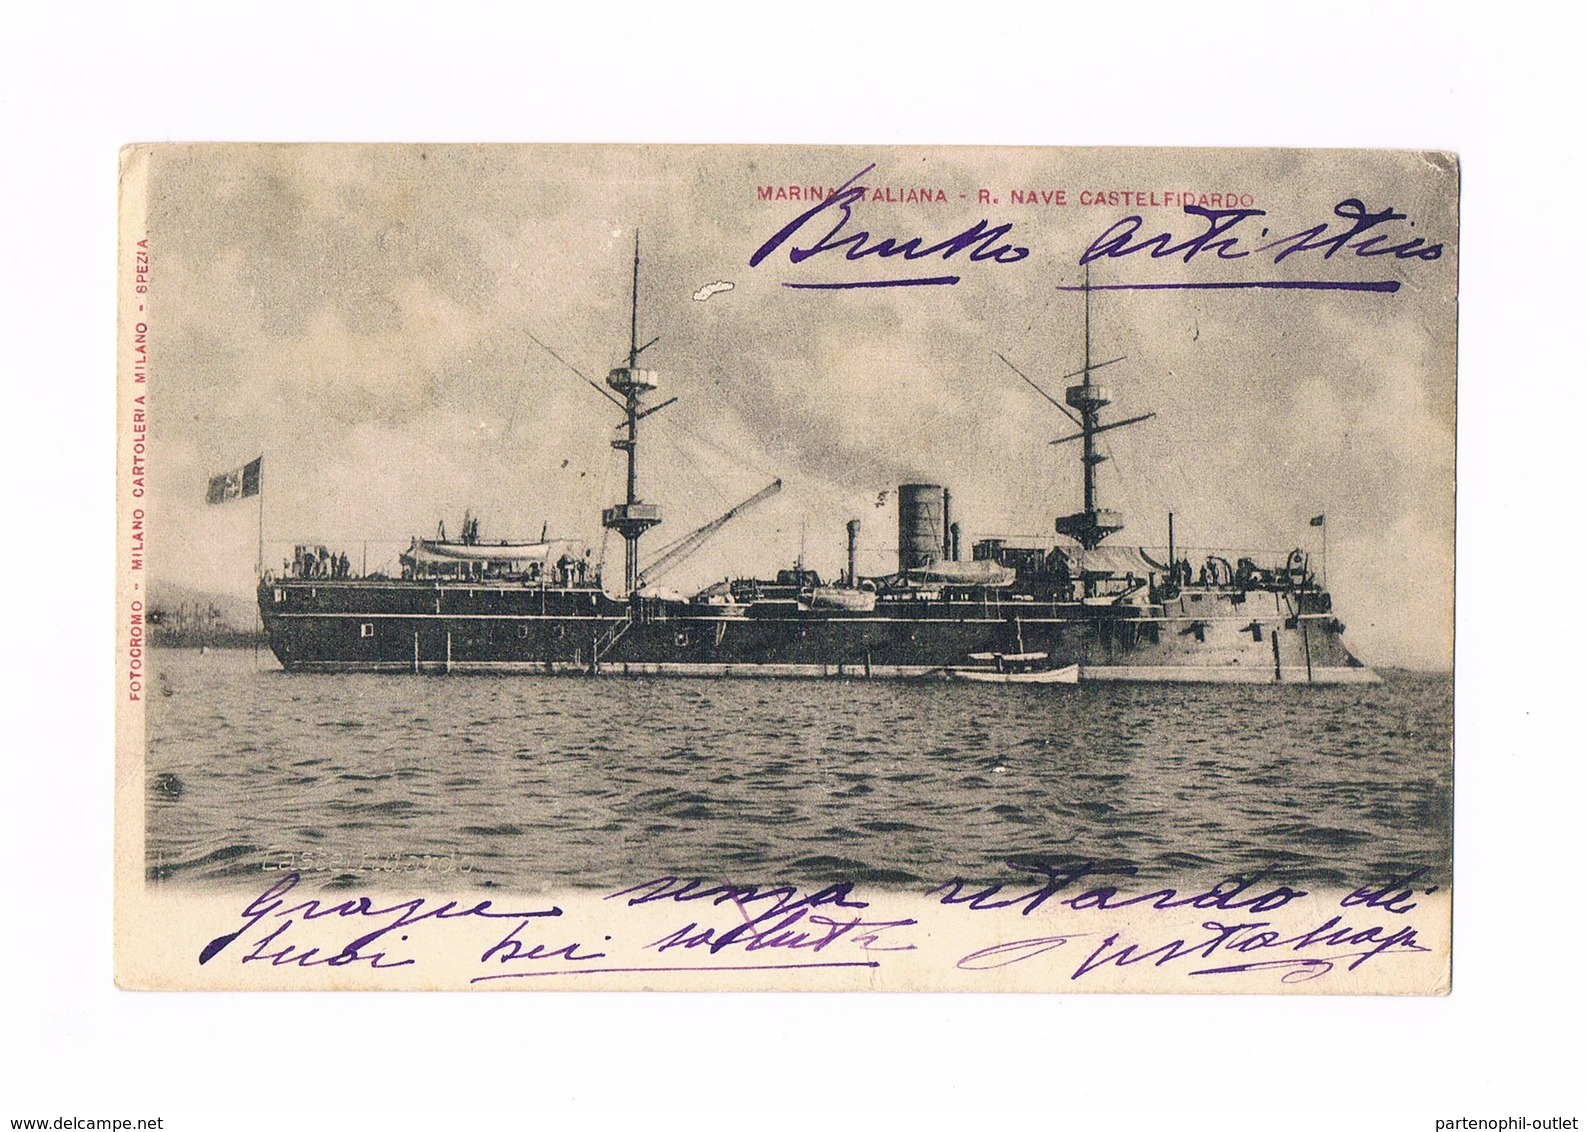 Cartolina - Postcard - Viaggiata/Sent - Regia Marina Italiana - Regia Nave Castelfidardo - Reggimenti